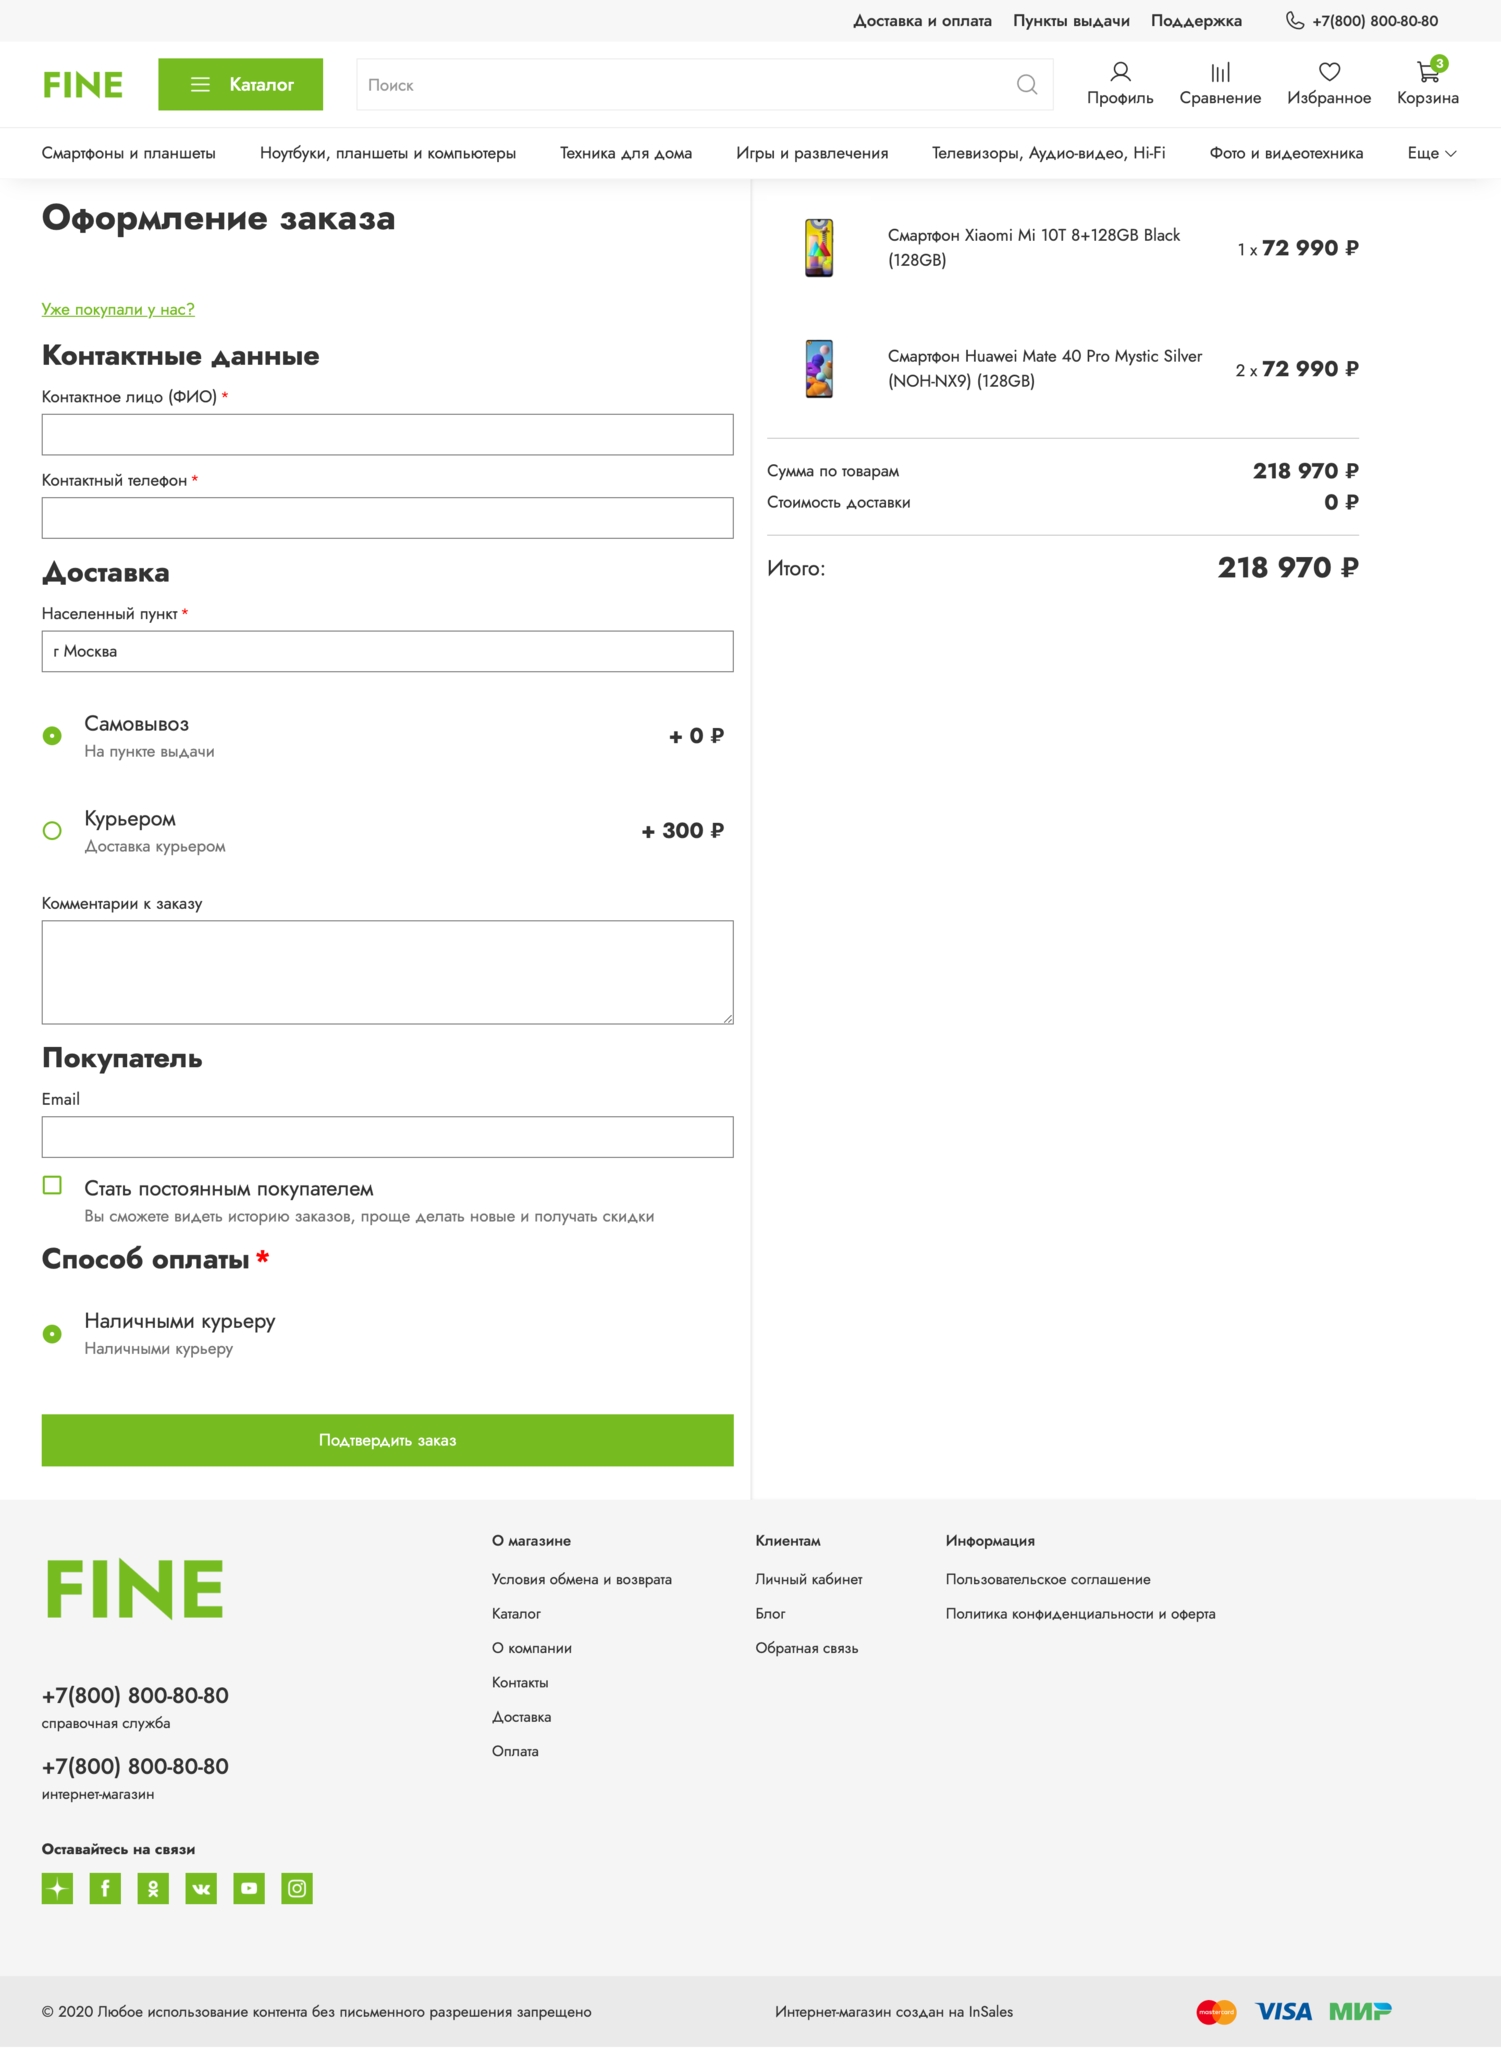 Шаблон интернет магазина - Fine